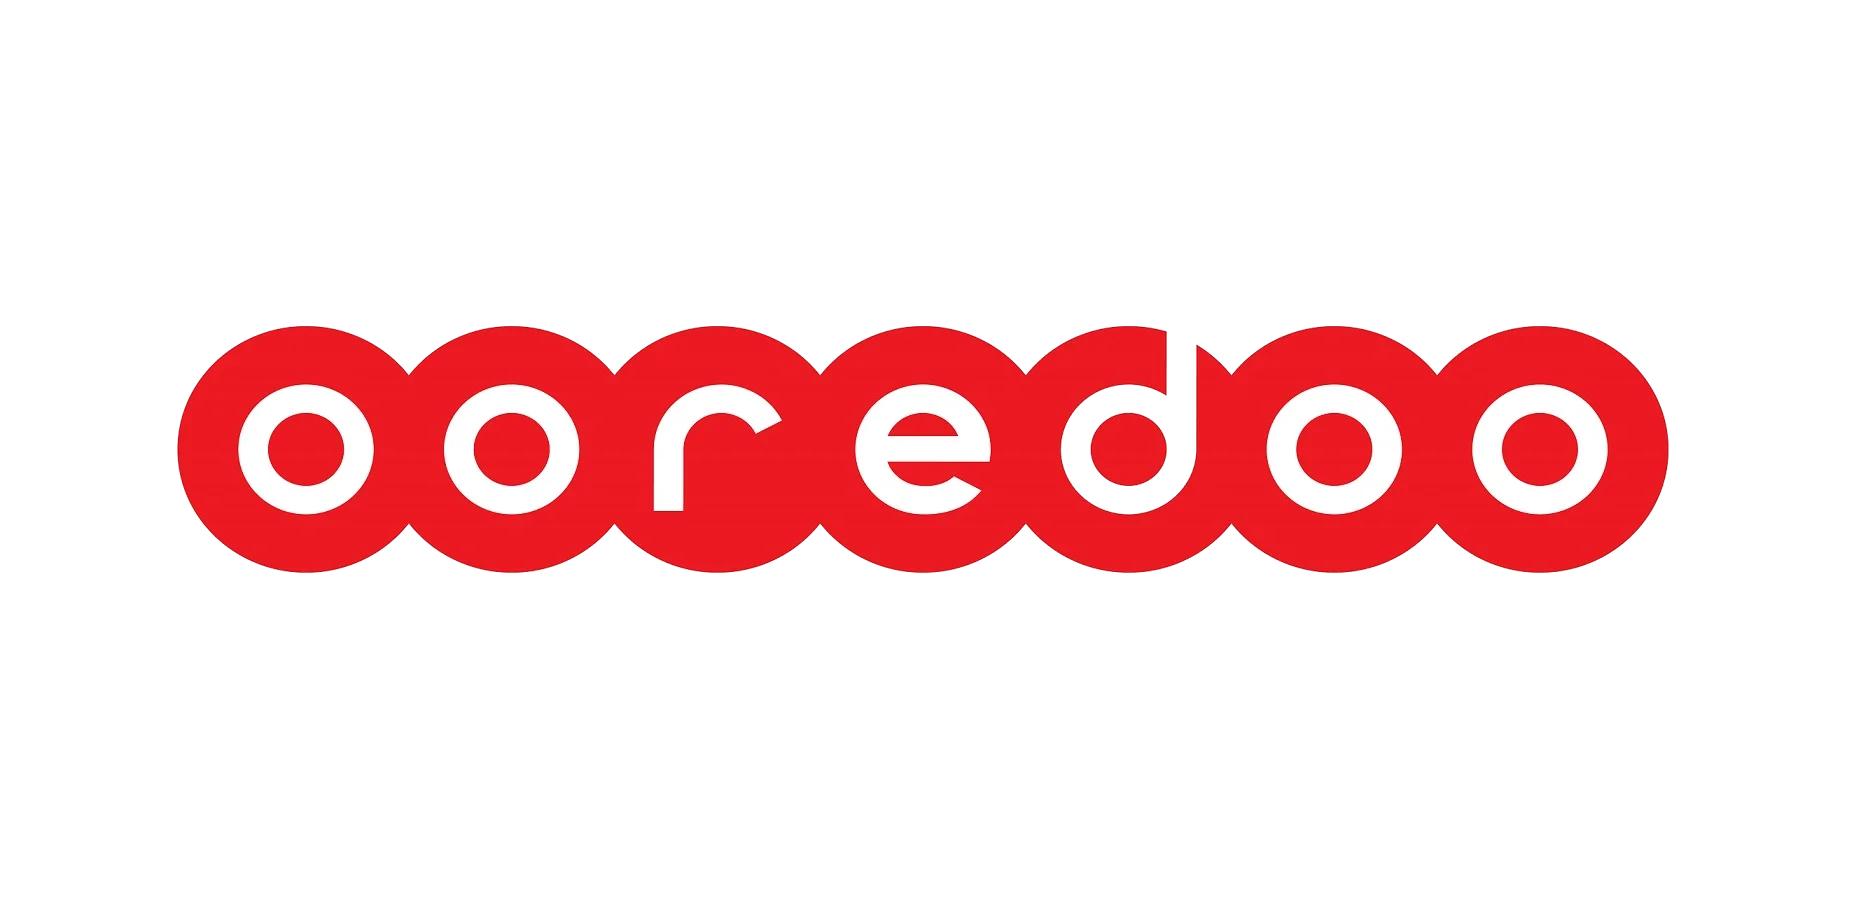 Ooredoo Telecom